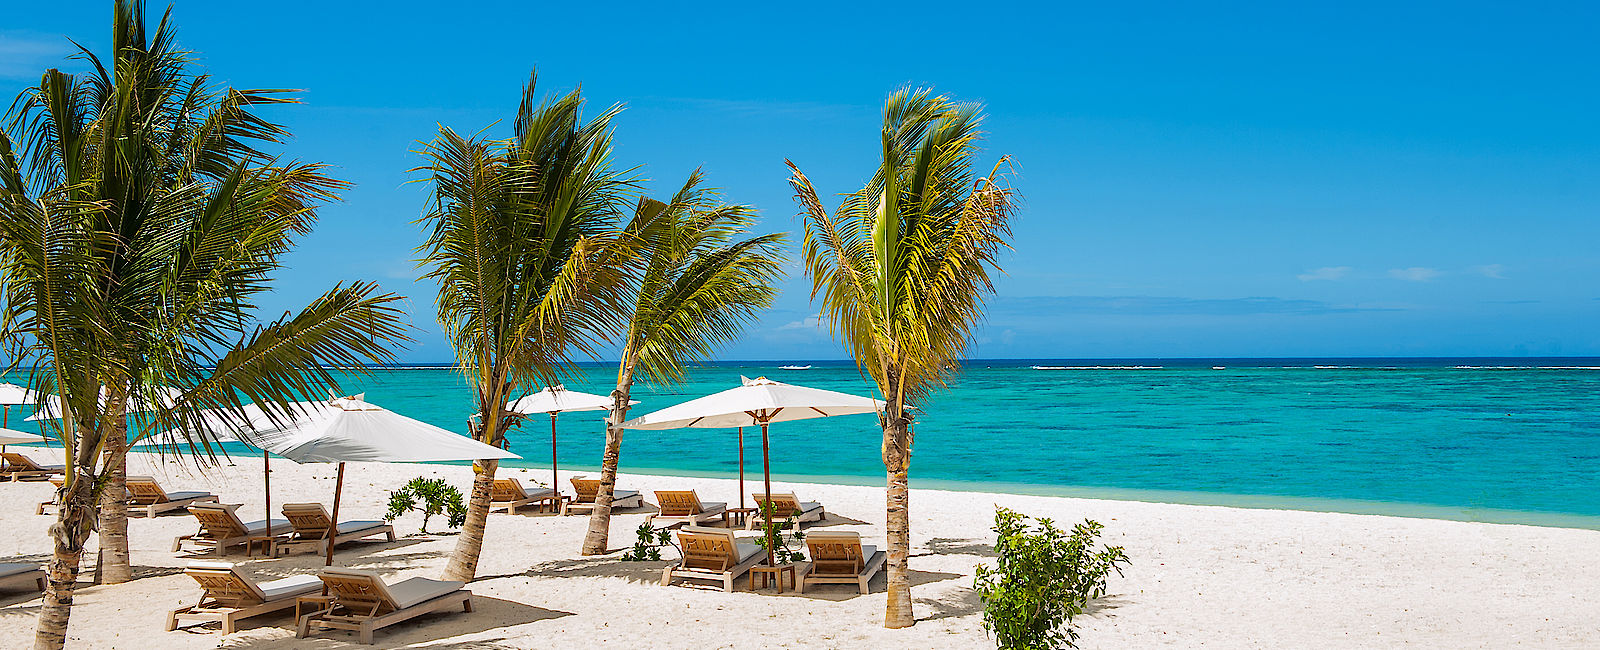 HOTELTEST
 The St. Regis Mauritius Resort 
 Kiter Hotspot 